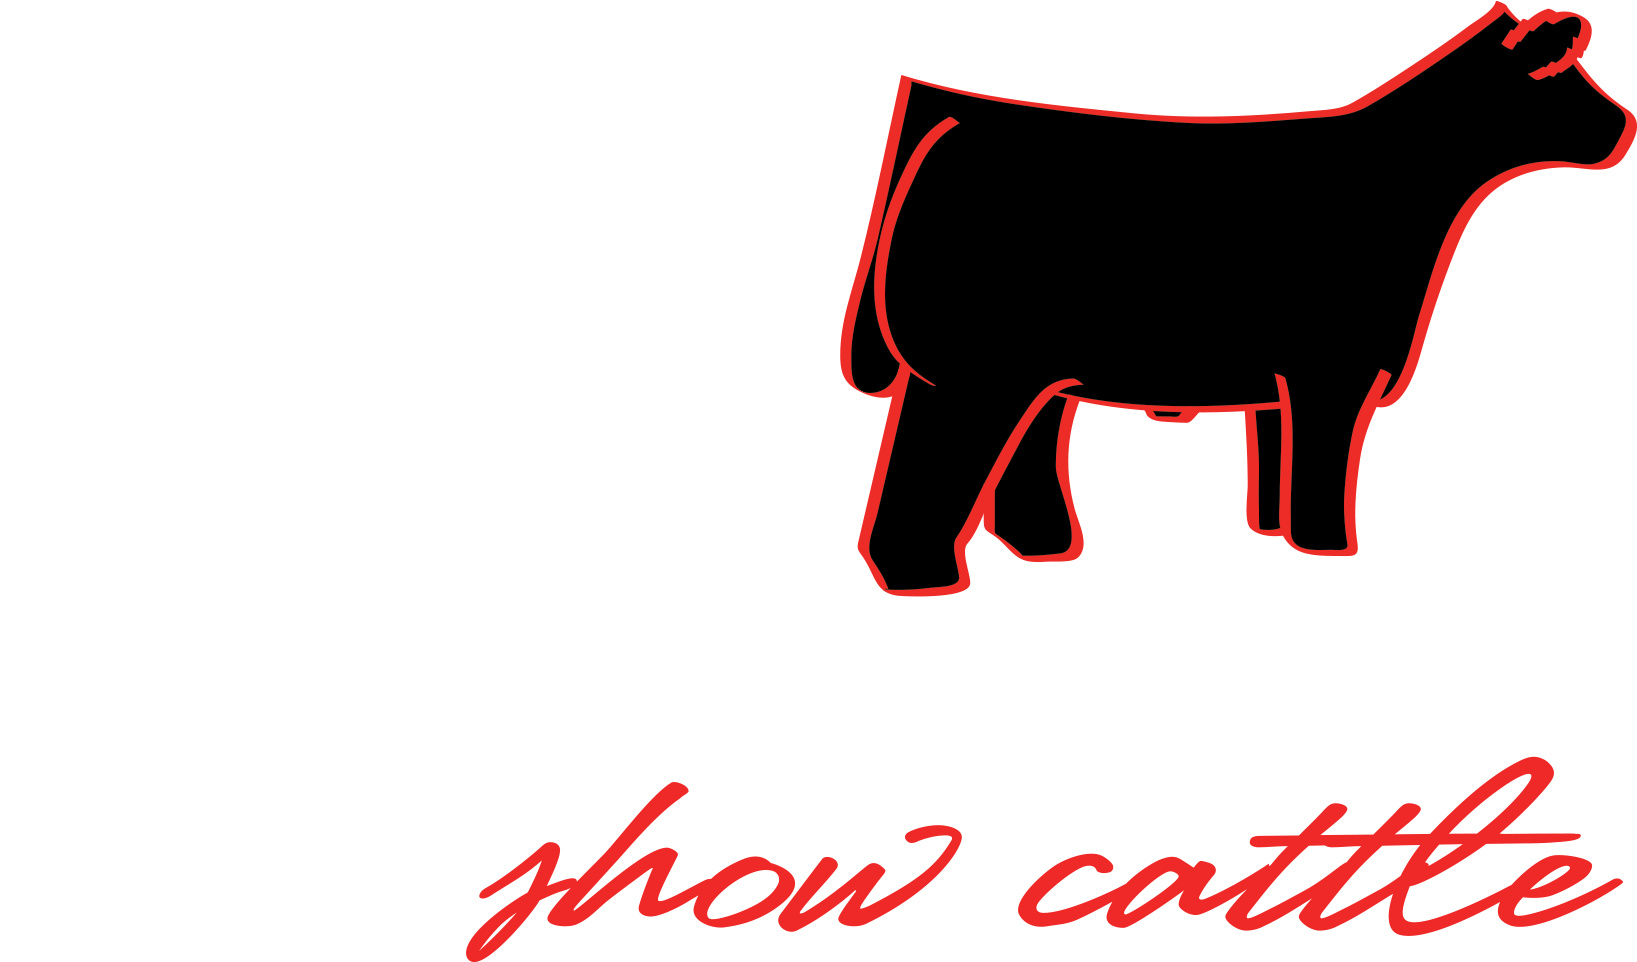 Cow clip art show. Cattle clipart logo